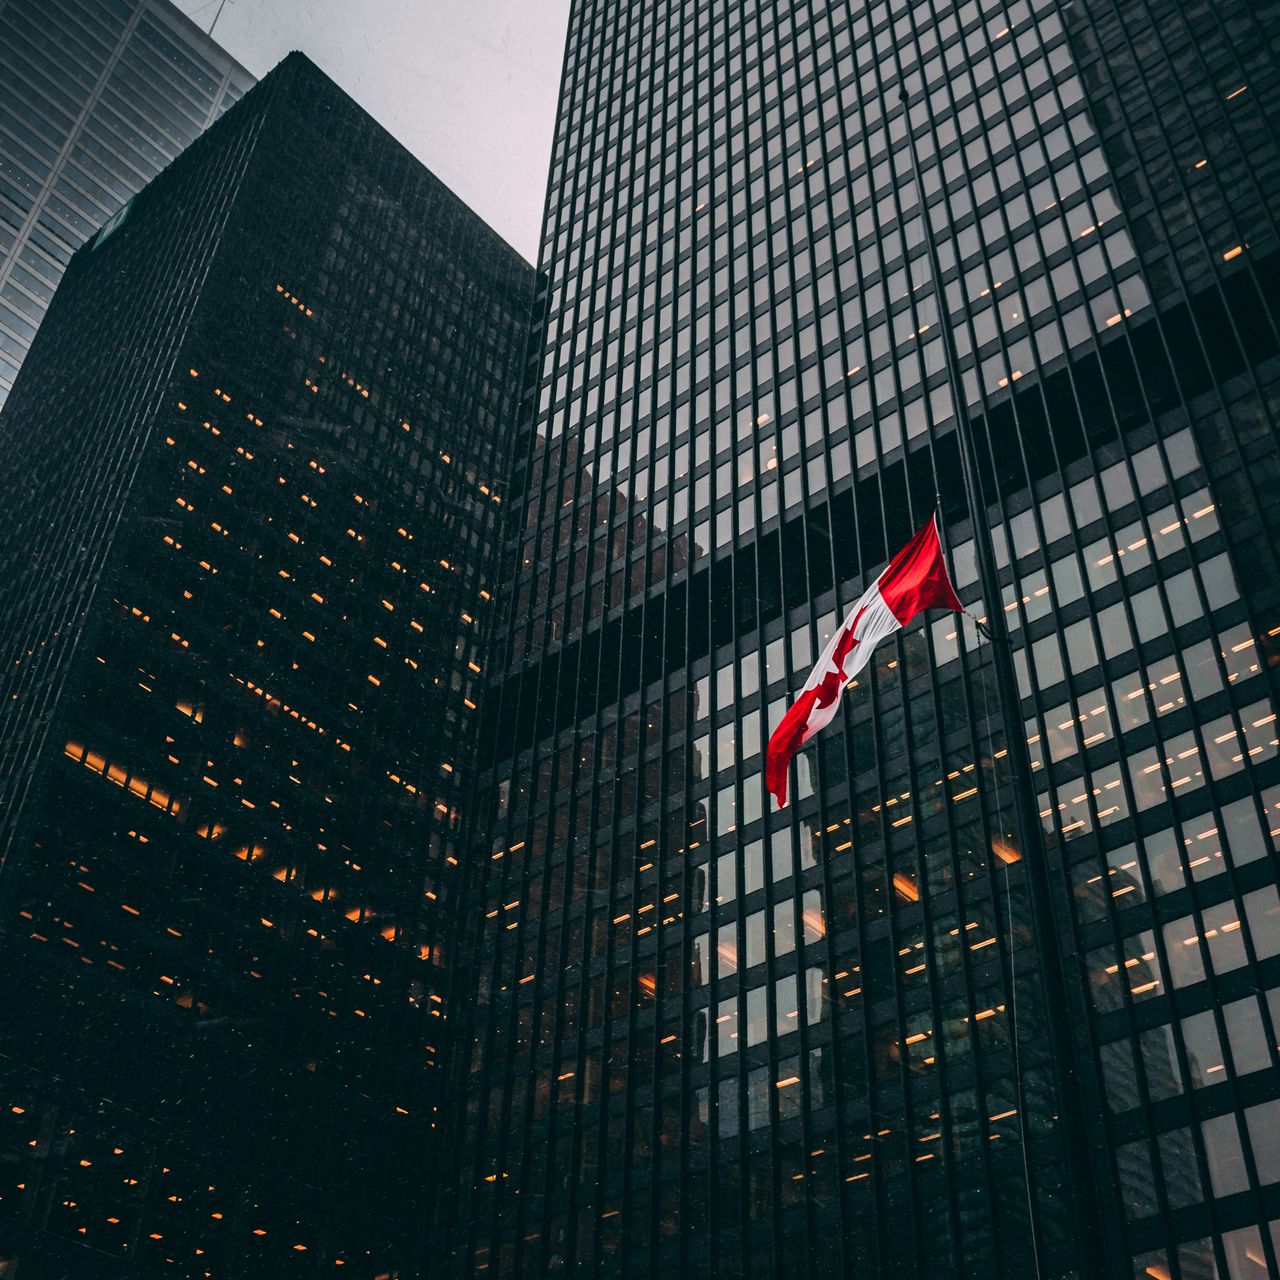 canadian flag ipad wallpaper